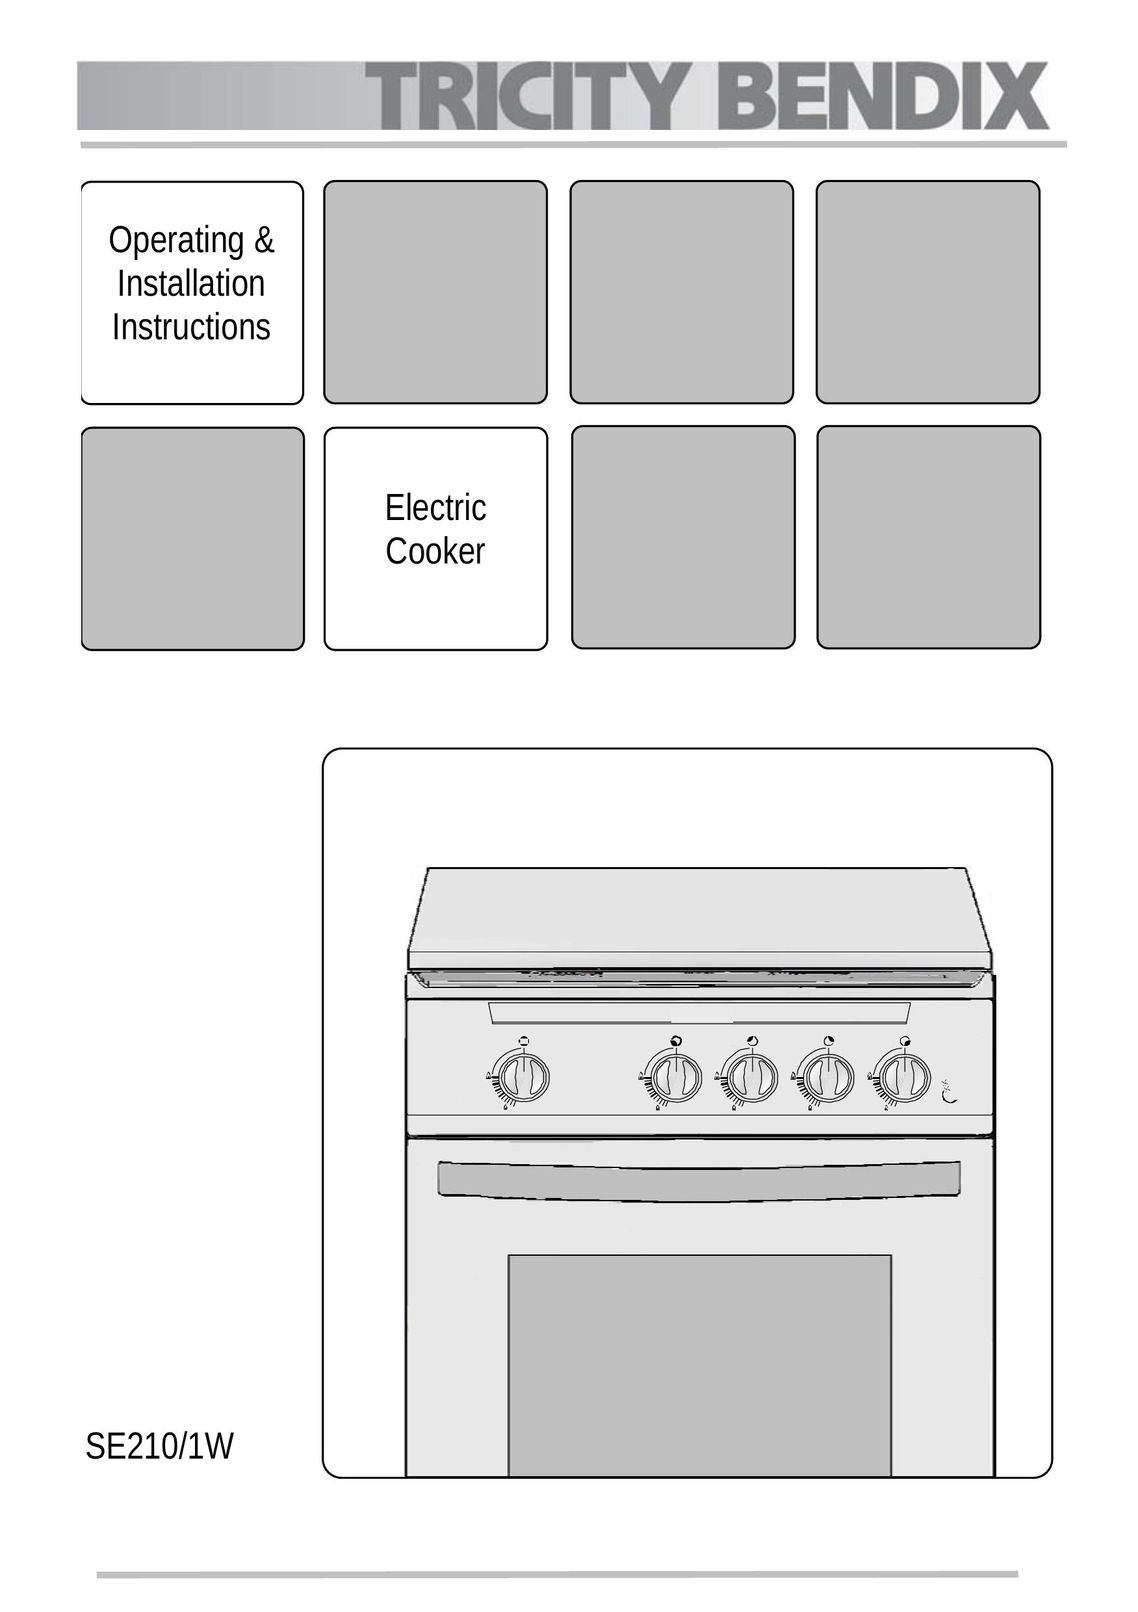 Tricity Bendix SE210/1W Cooktop User Manual